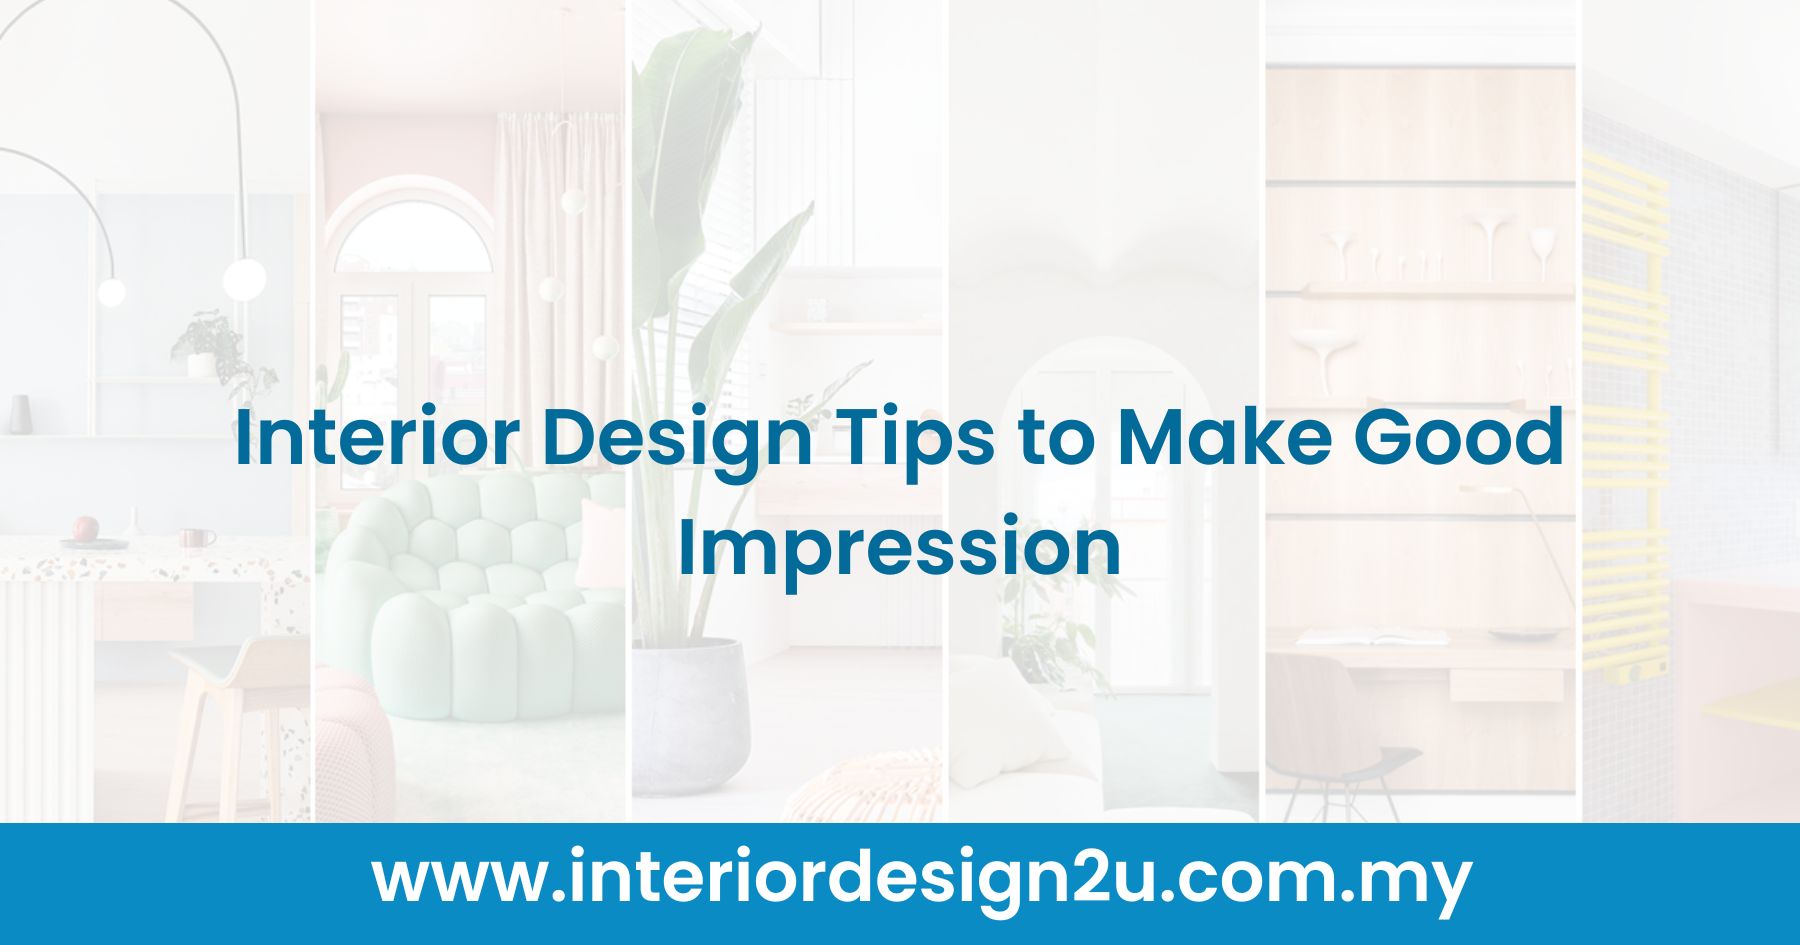 Interior Design Tips to Make Good Impression